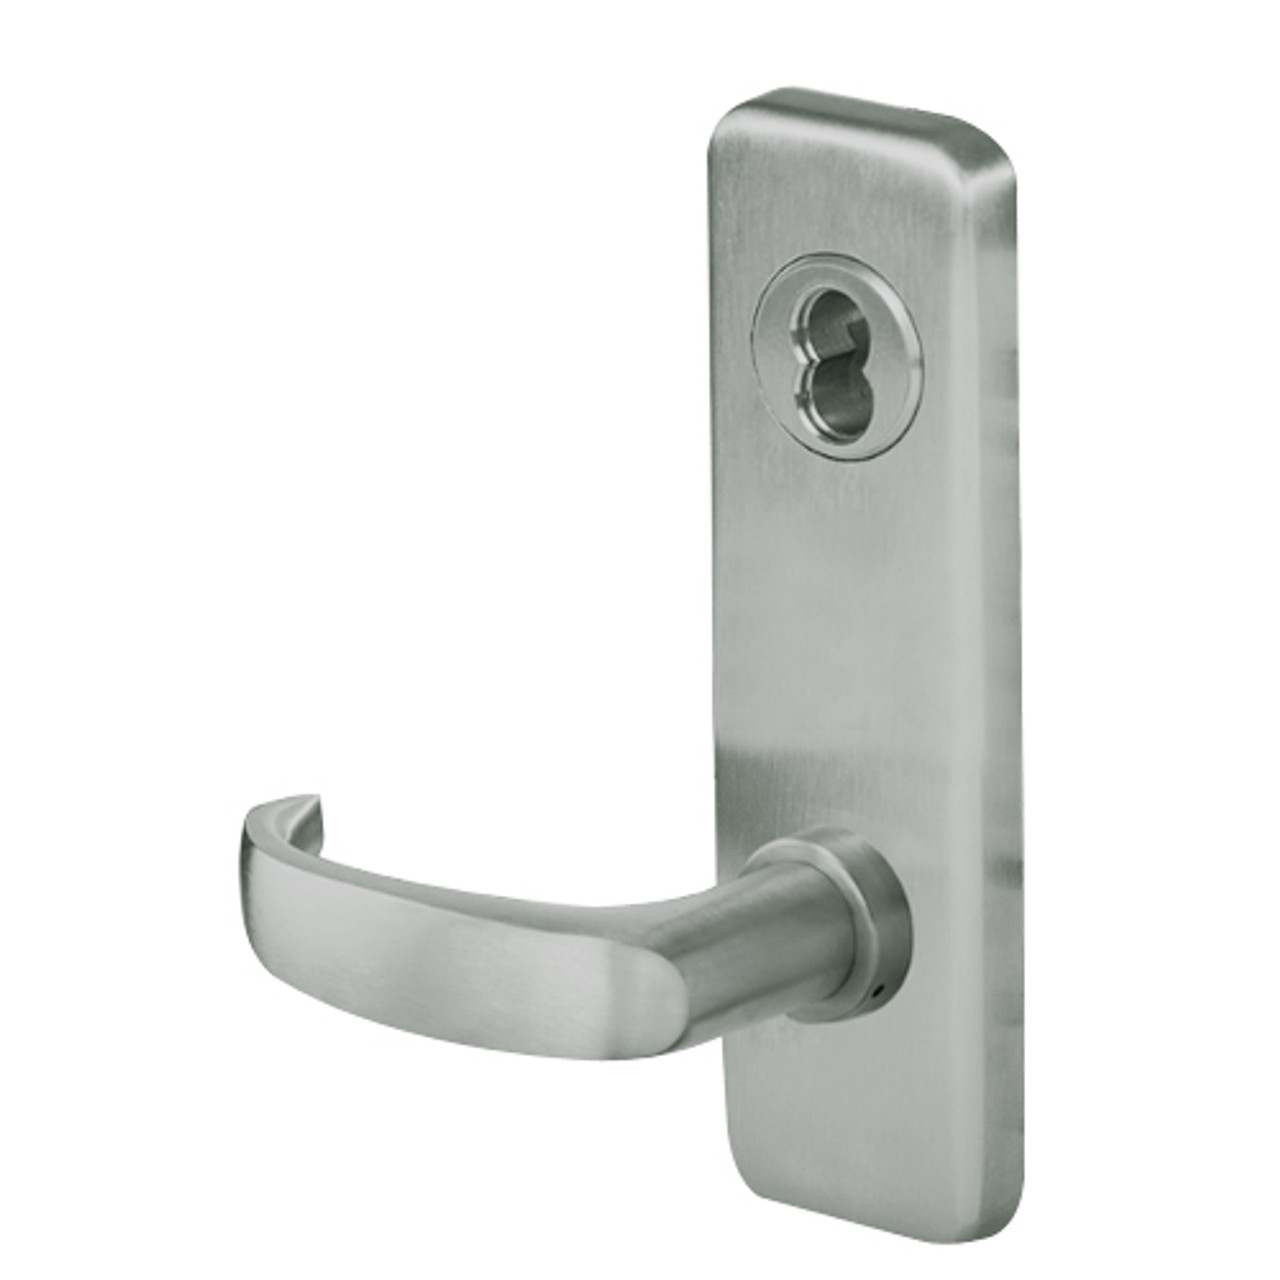 45HW7DEU14J619 Best 40HW series Single Key Latch Fail Secure Electromechanical Mortise Lever Lock with Curved w/ Return Style in Satin Nickel